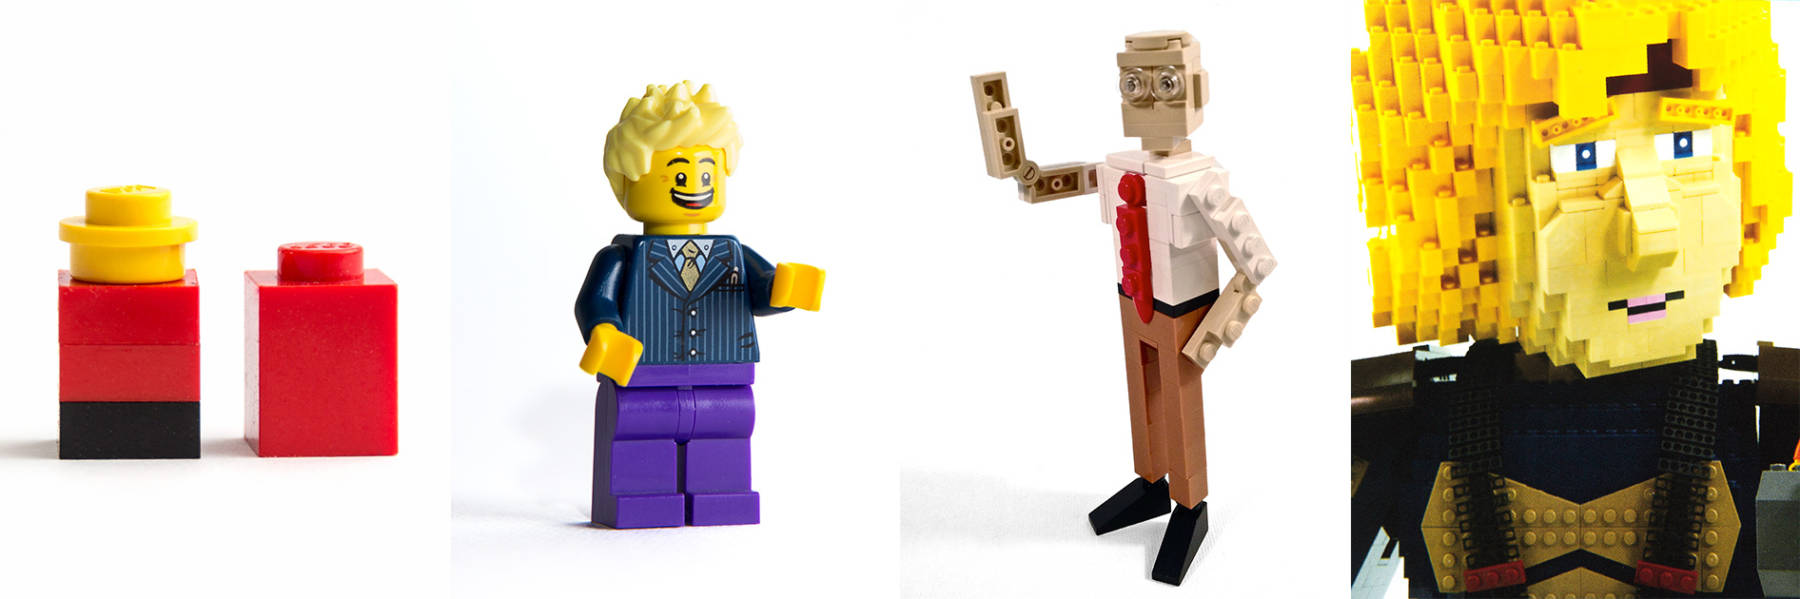 Verschiedene LEGO Figuren Stile